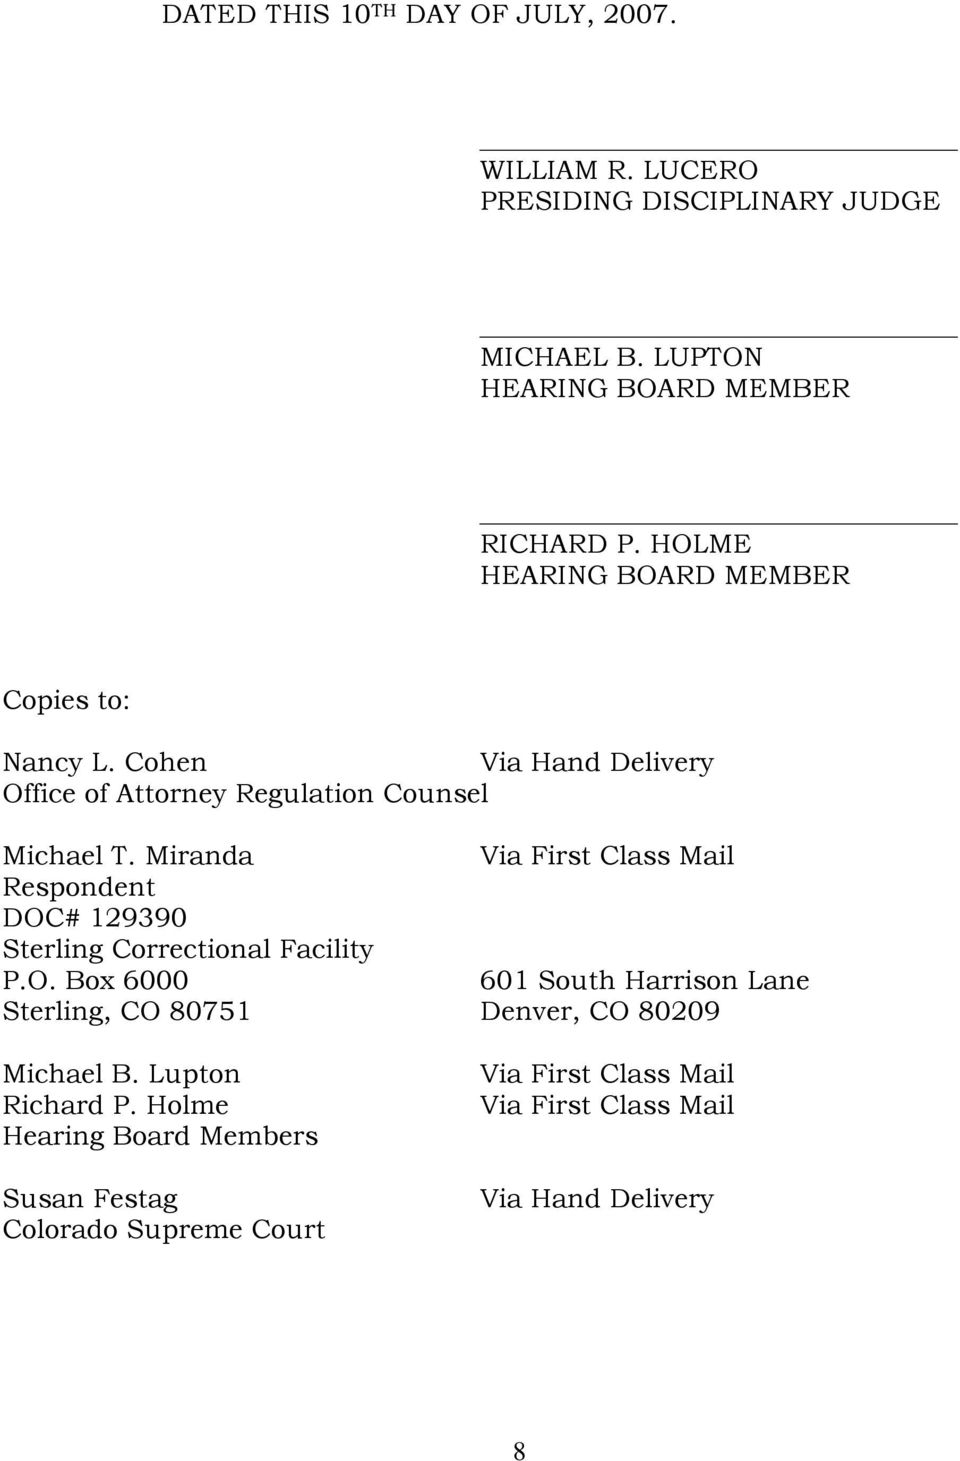 Miranda Via First Class Mail Respondent DOC# 129390 Sterling Correctional Facility P.O. Box 6000 601 South Harrison Lane Sterling, CO 80751 Denver, CO 80209 Michael B.